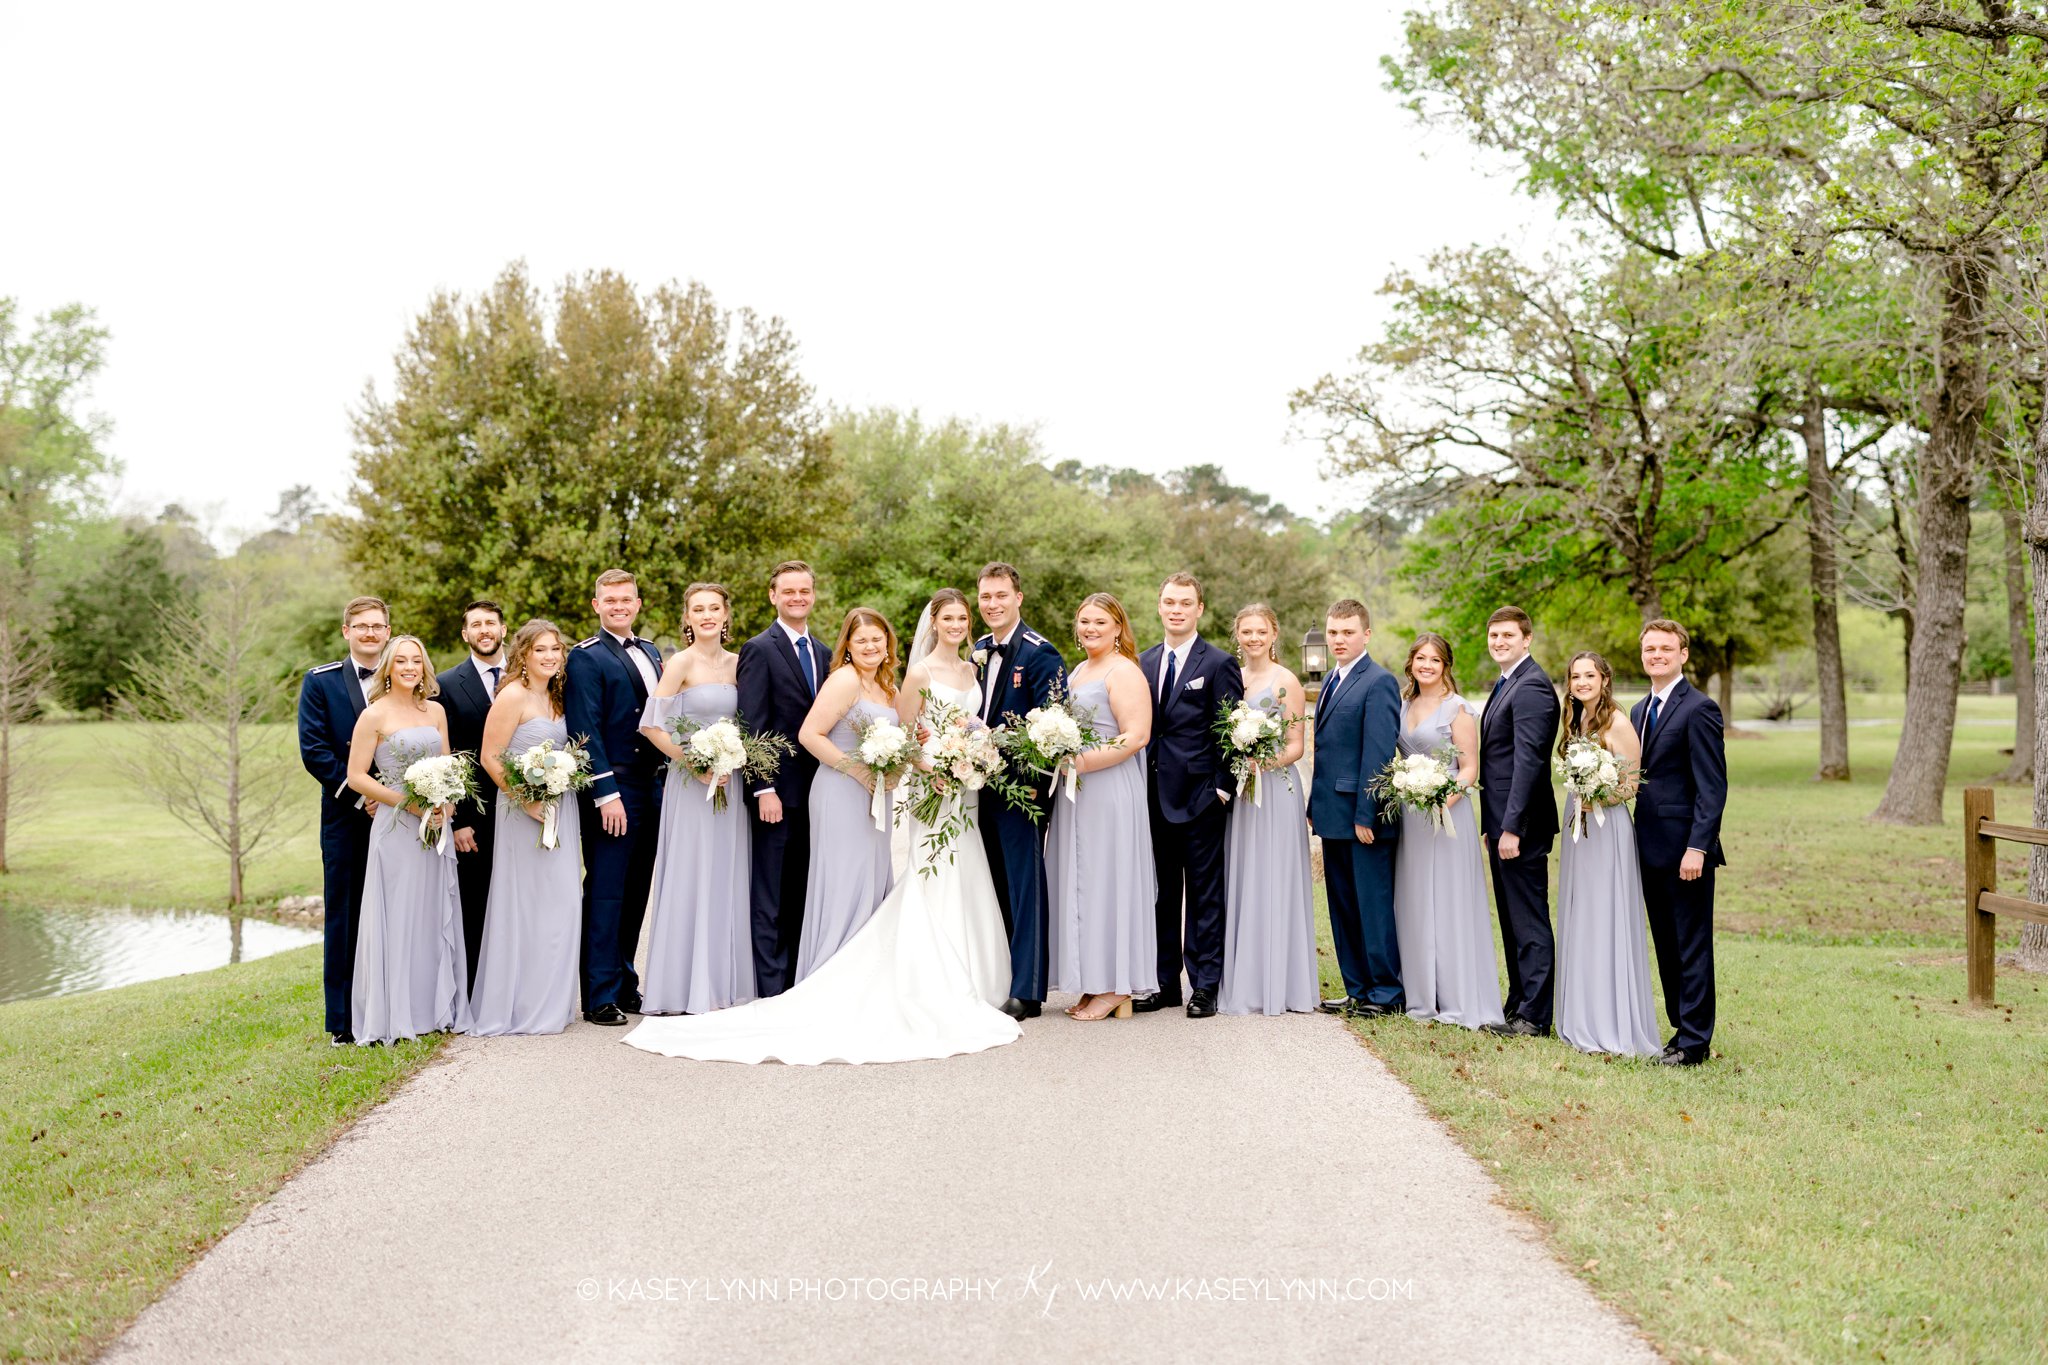 Balmorhea Events Wedding / Kasey Lynn Photography